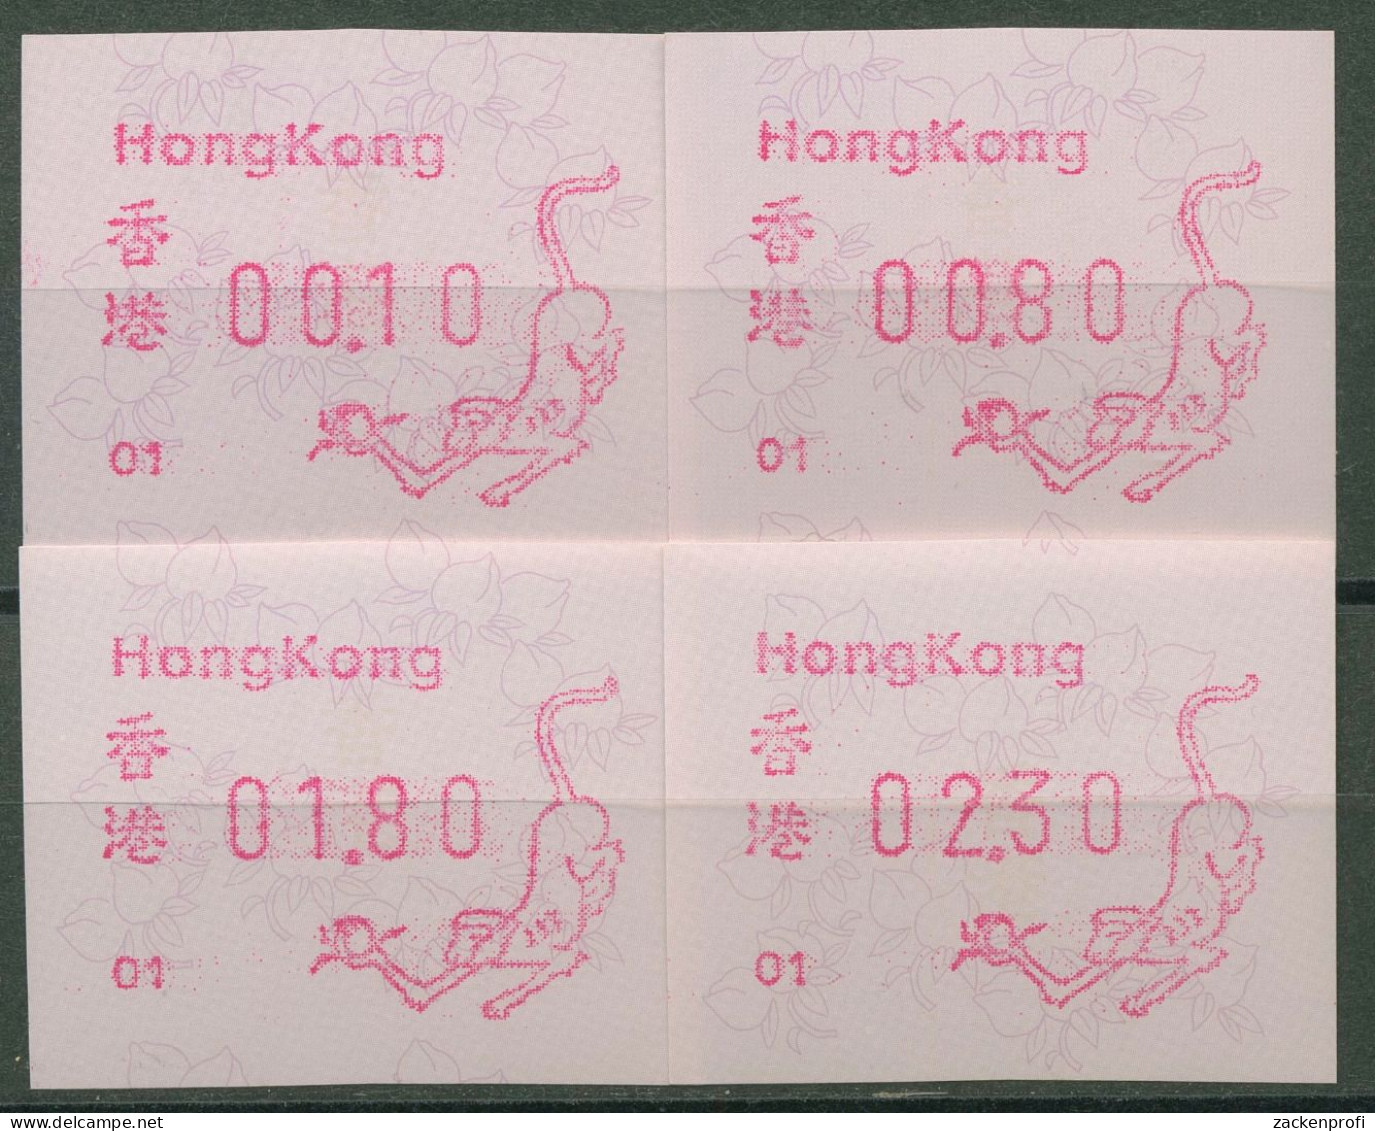 Hongkong 1992 Jahr Des Affen Automatenmarke 7.2 S1.1 Automat 01 Postfrisch - Distributeurs